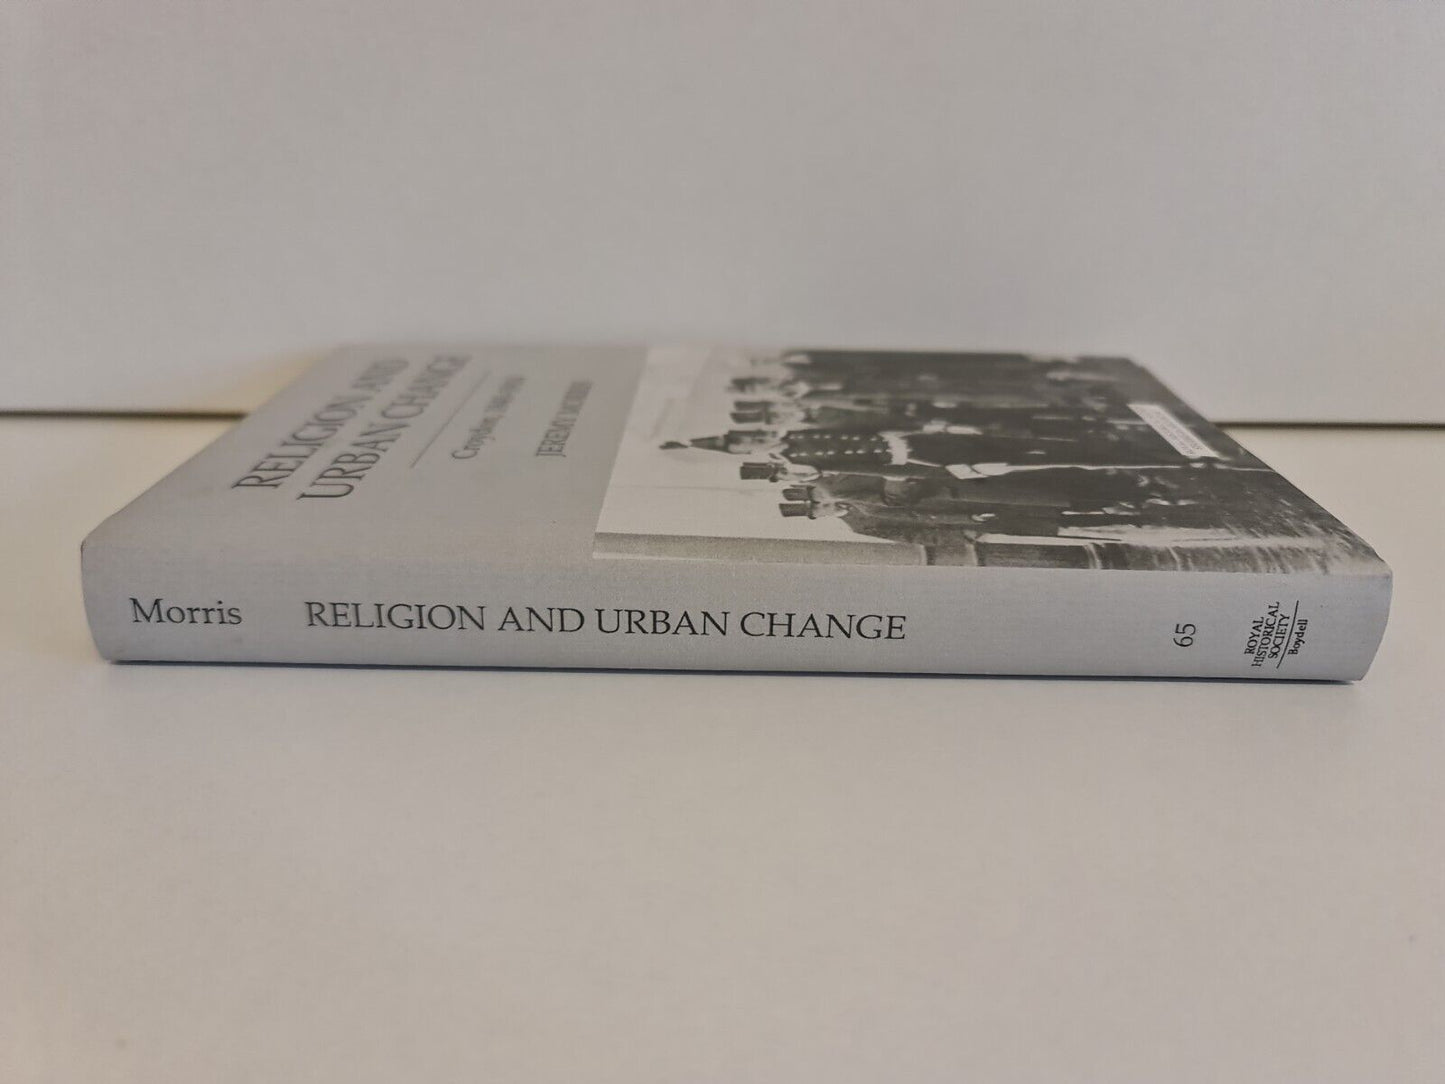 Religion and Urban Change: Croydon, 1840-1914 by J.N. Morris